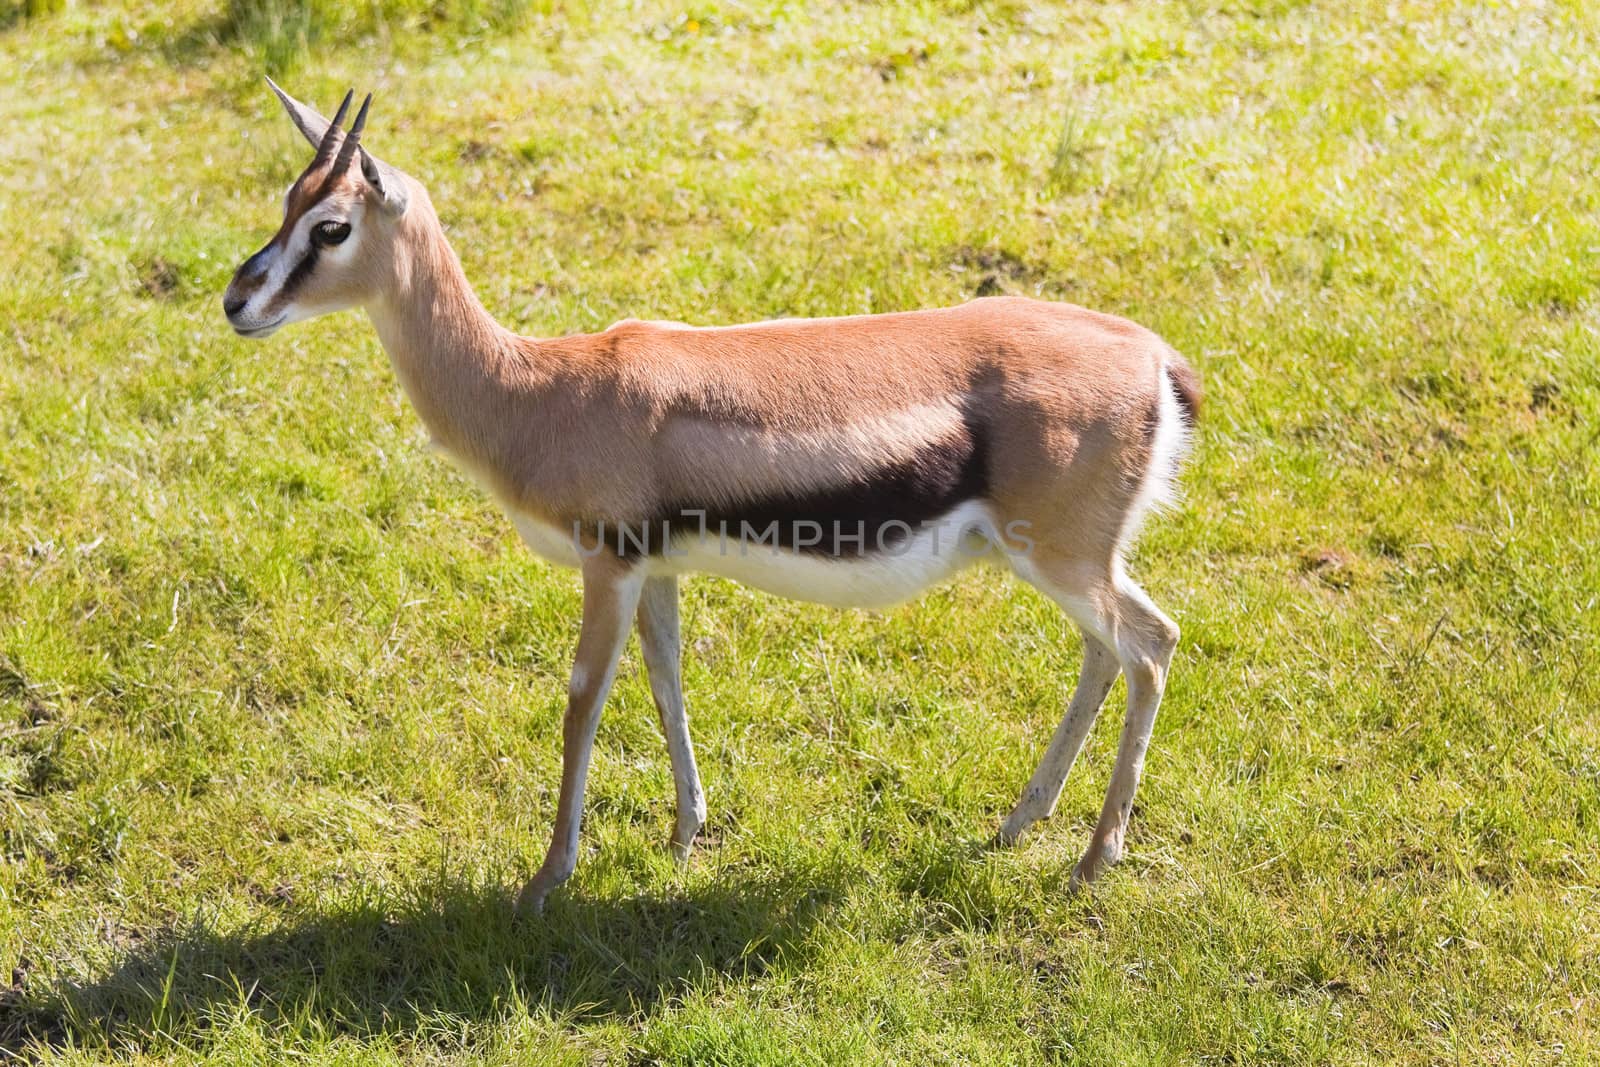 African Mhorr gazelle standing on grass in sunshine